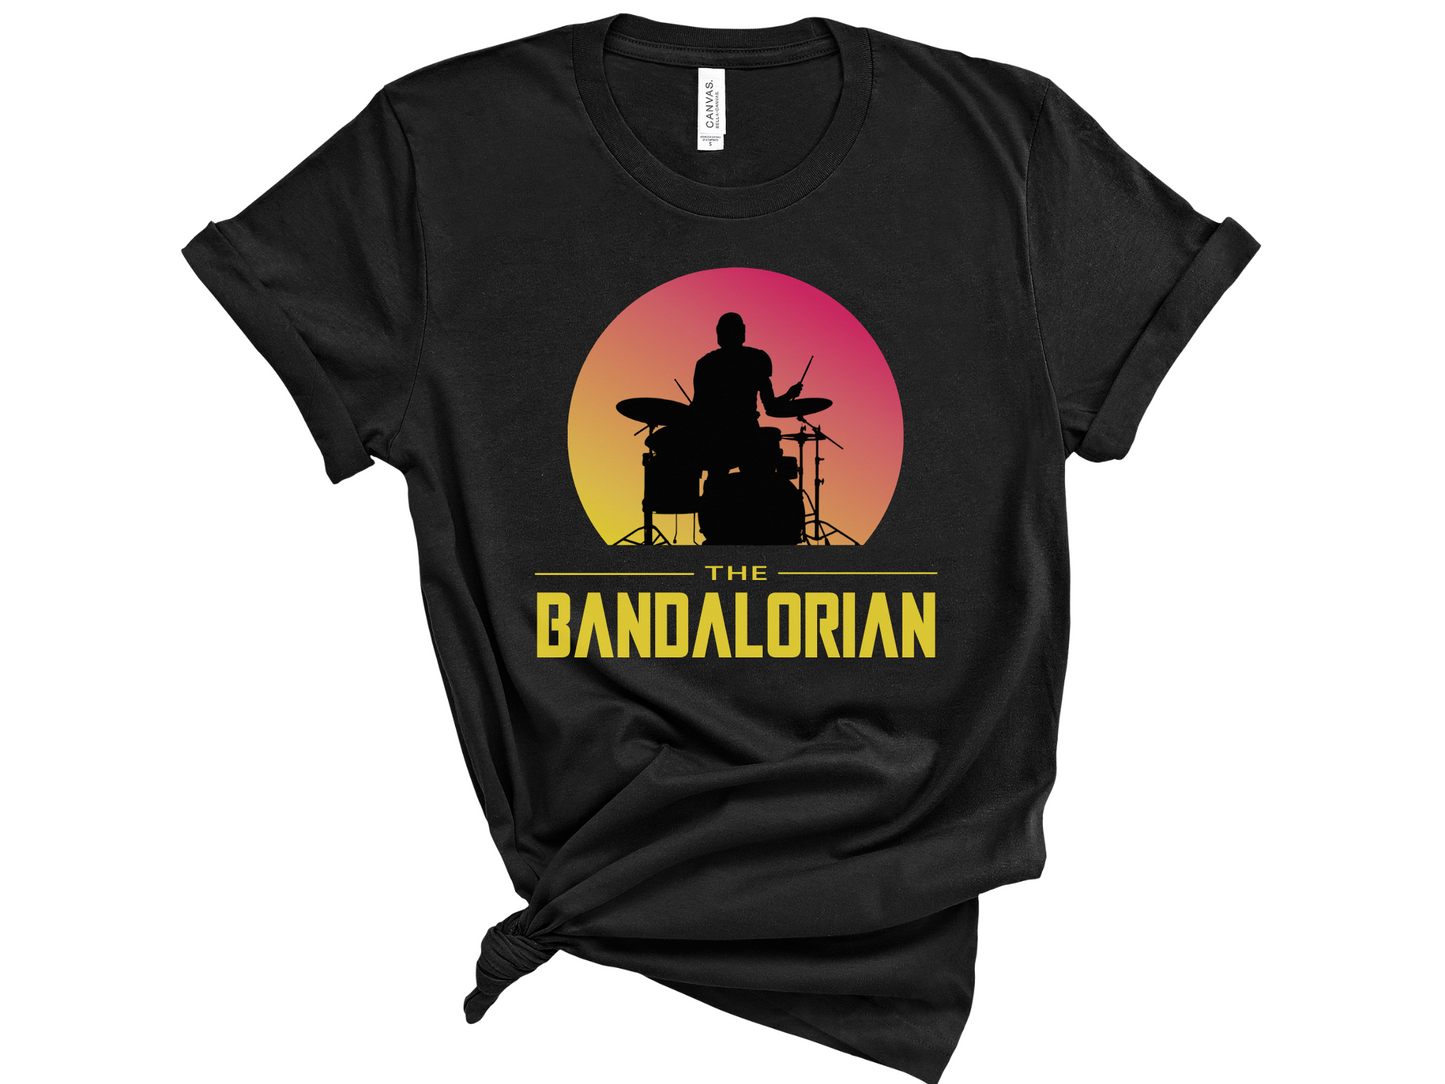 The Bandalorian Unisex T-Shirt: All Band Instruments